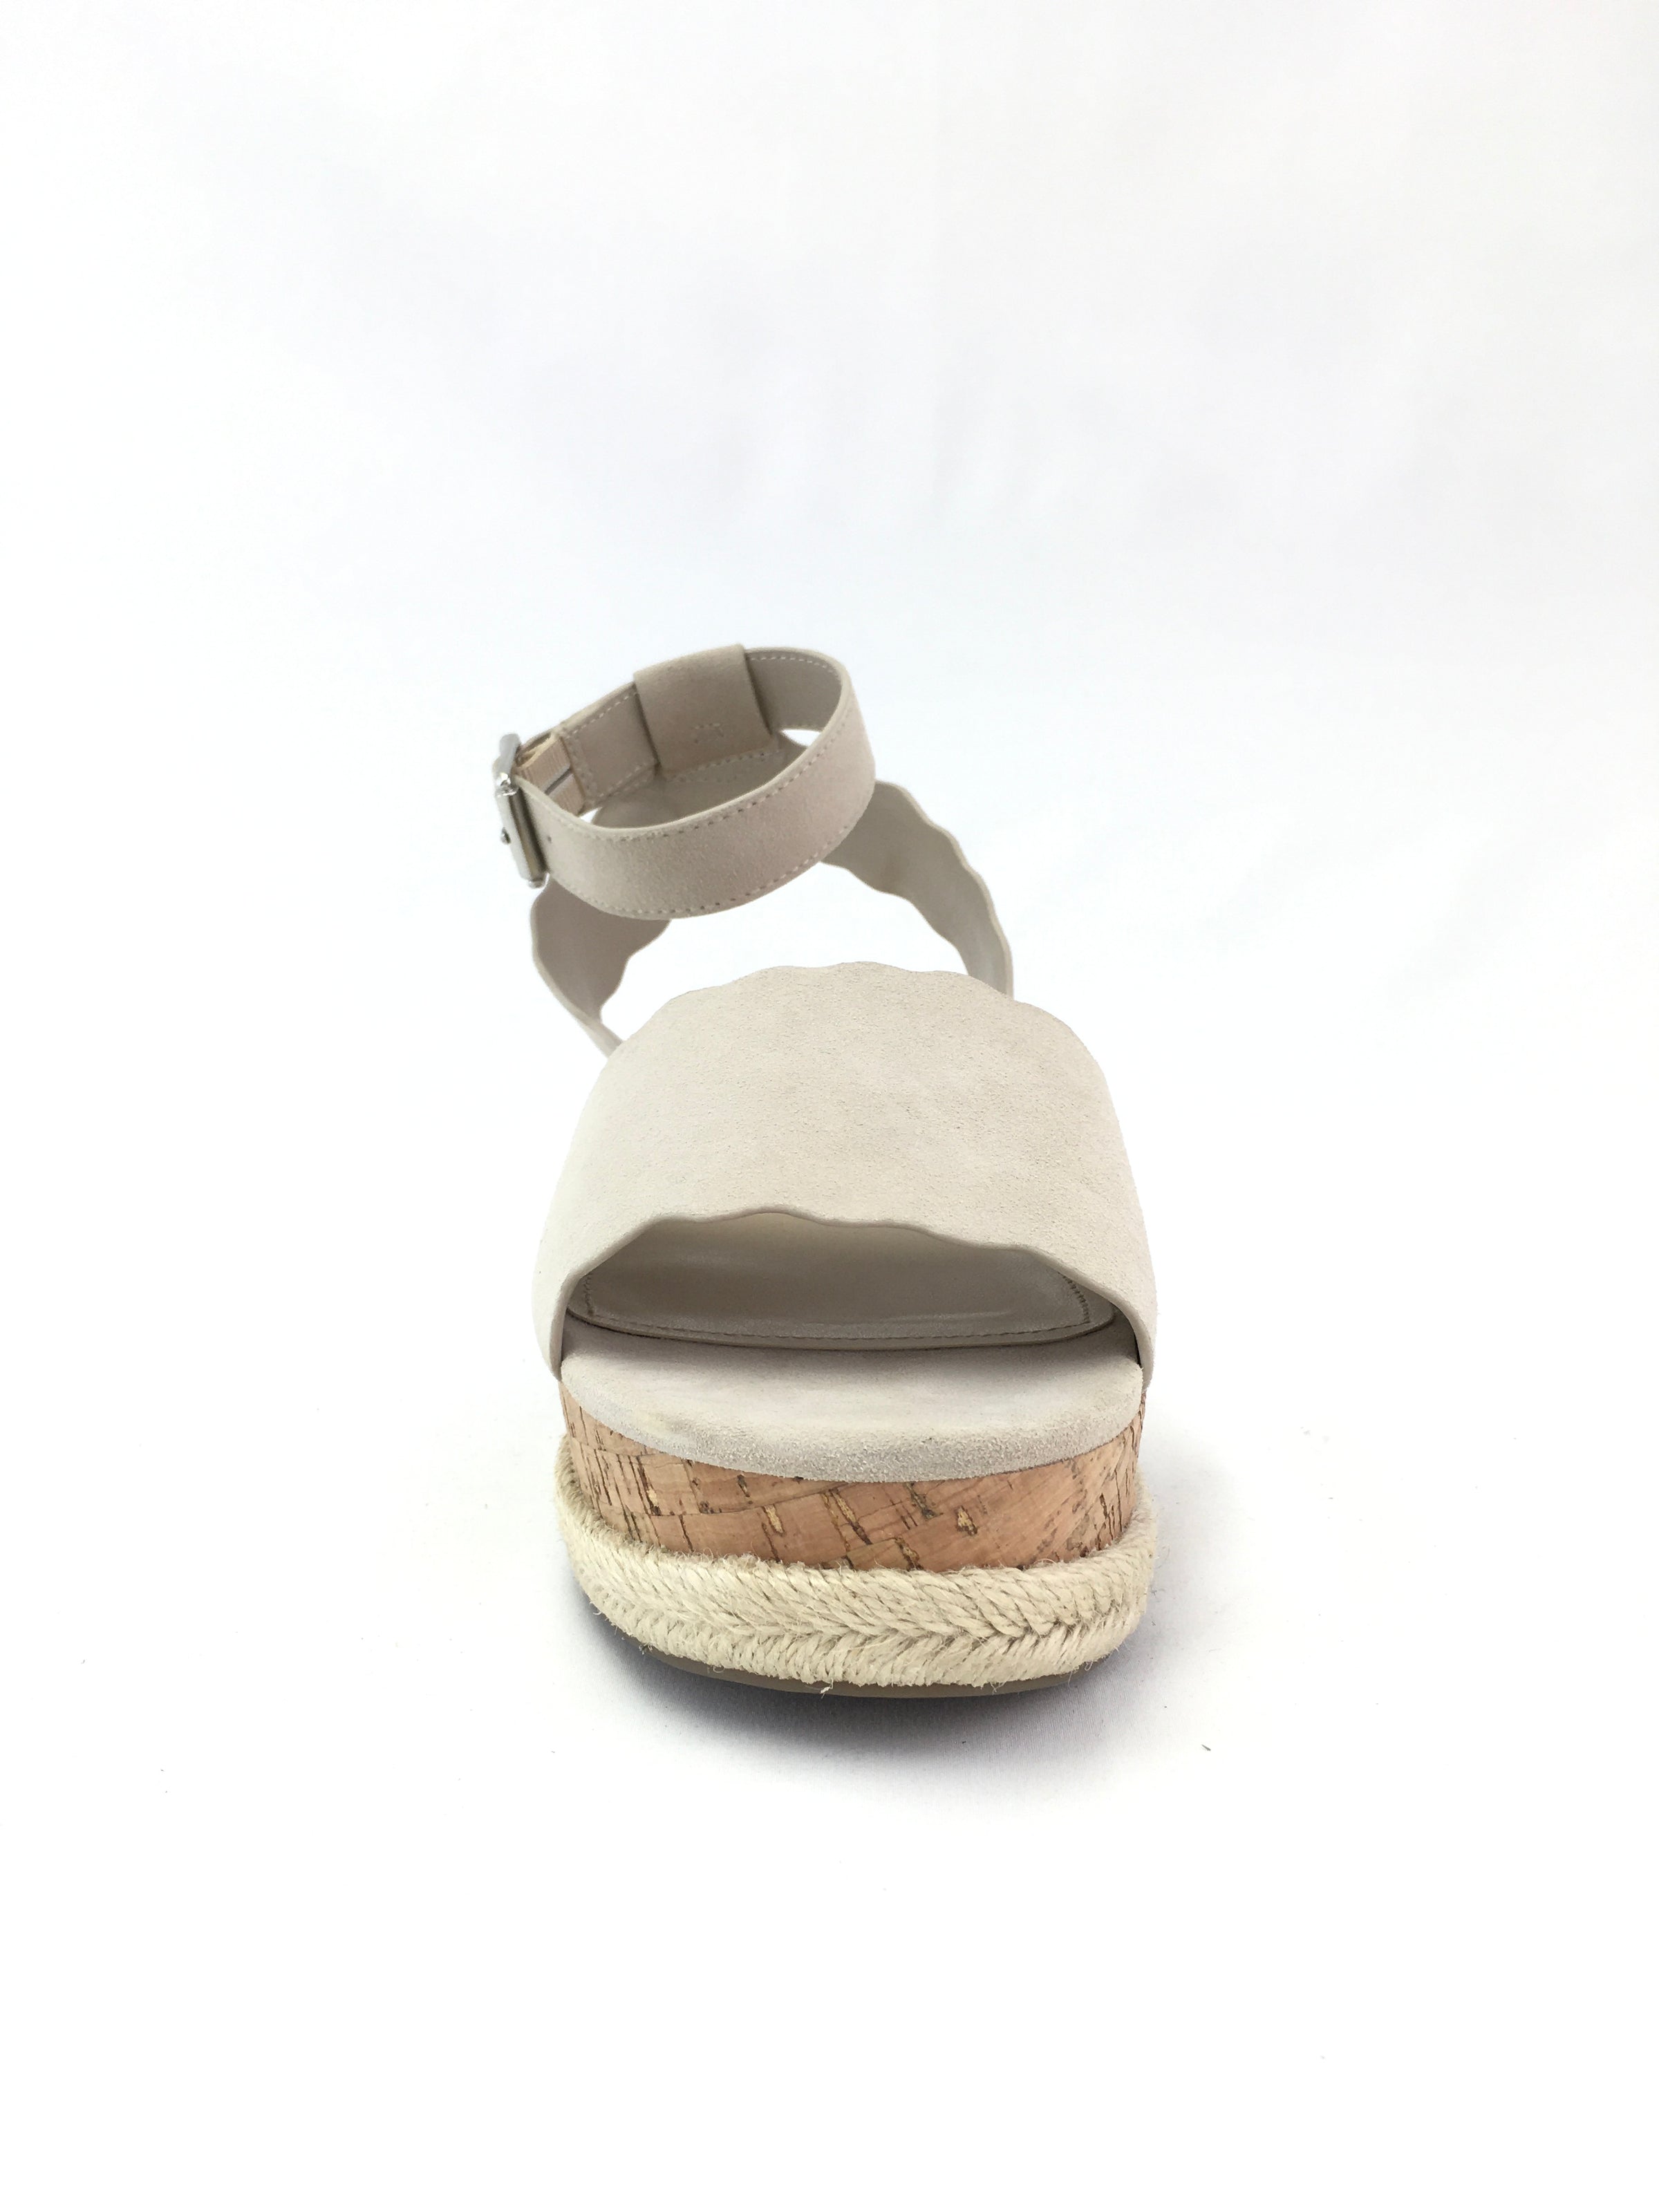 Marc Fisher Mffaitful Platform Sandal Size 8.5